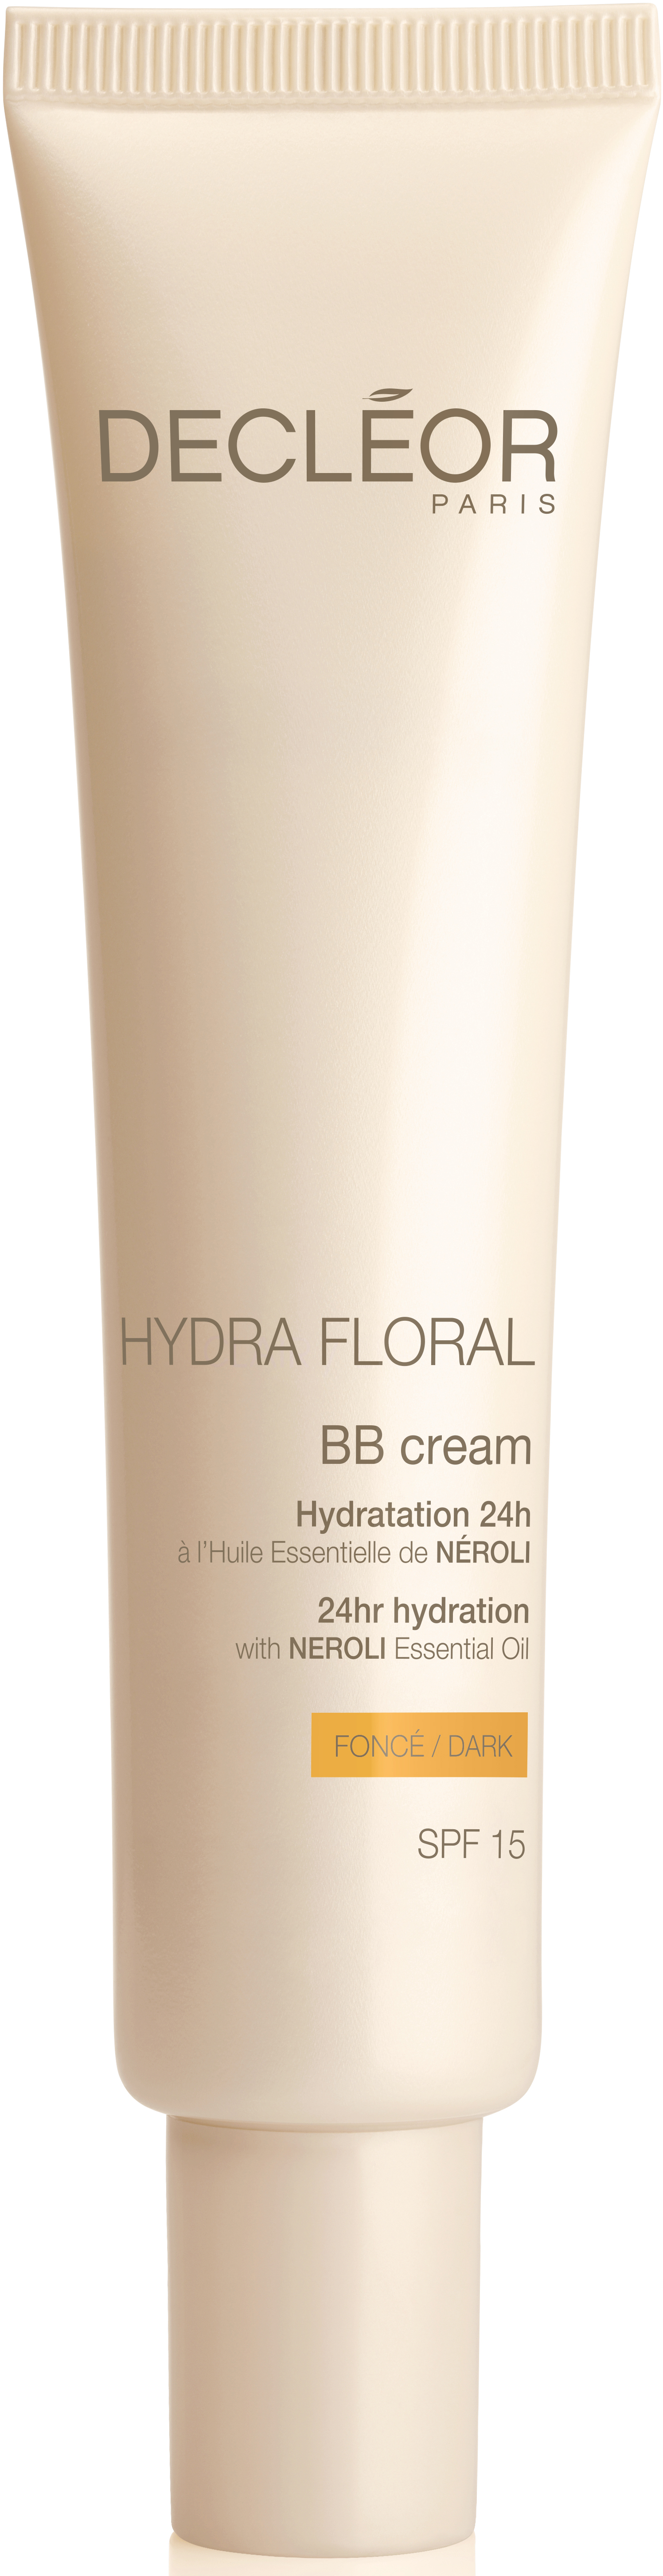 Decleor Hydra FloralMulti-Protect BB Cream 24h Moist Activator SPF 15 - Dark Tint